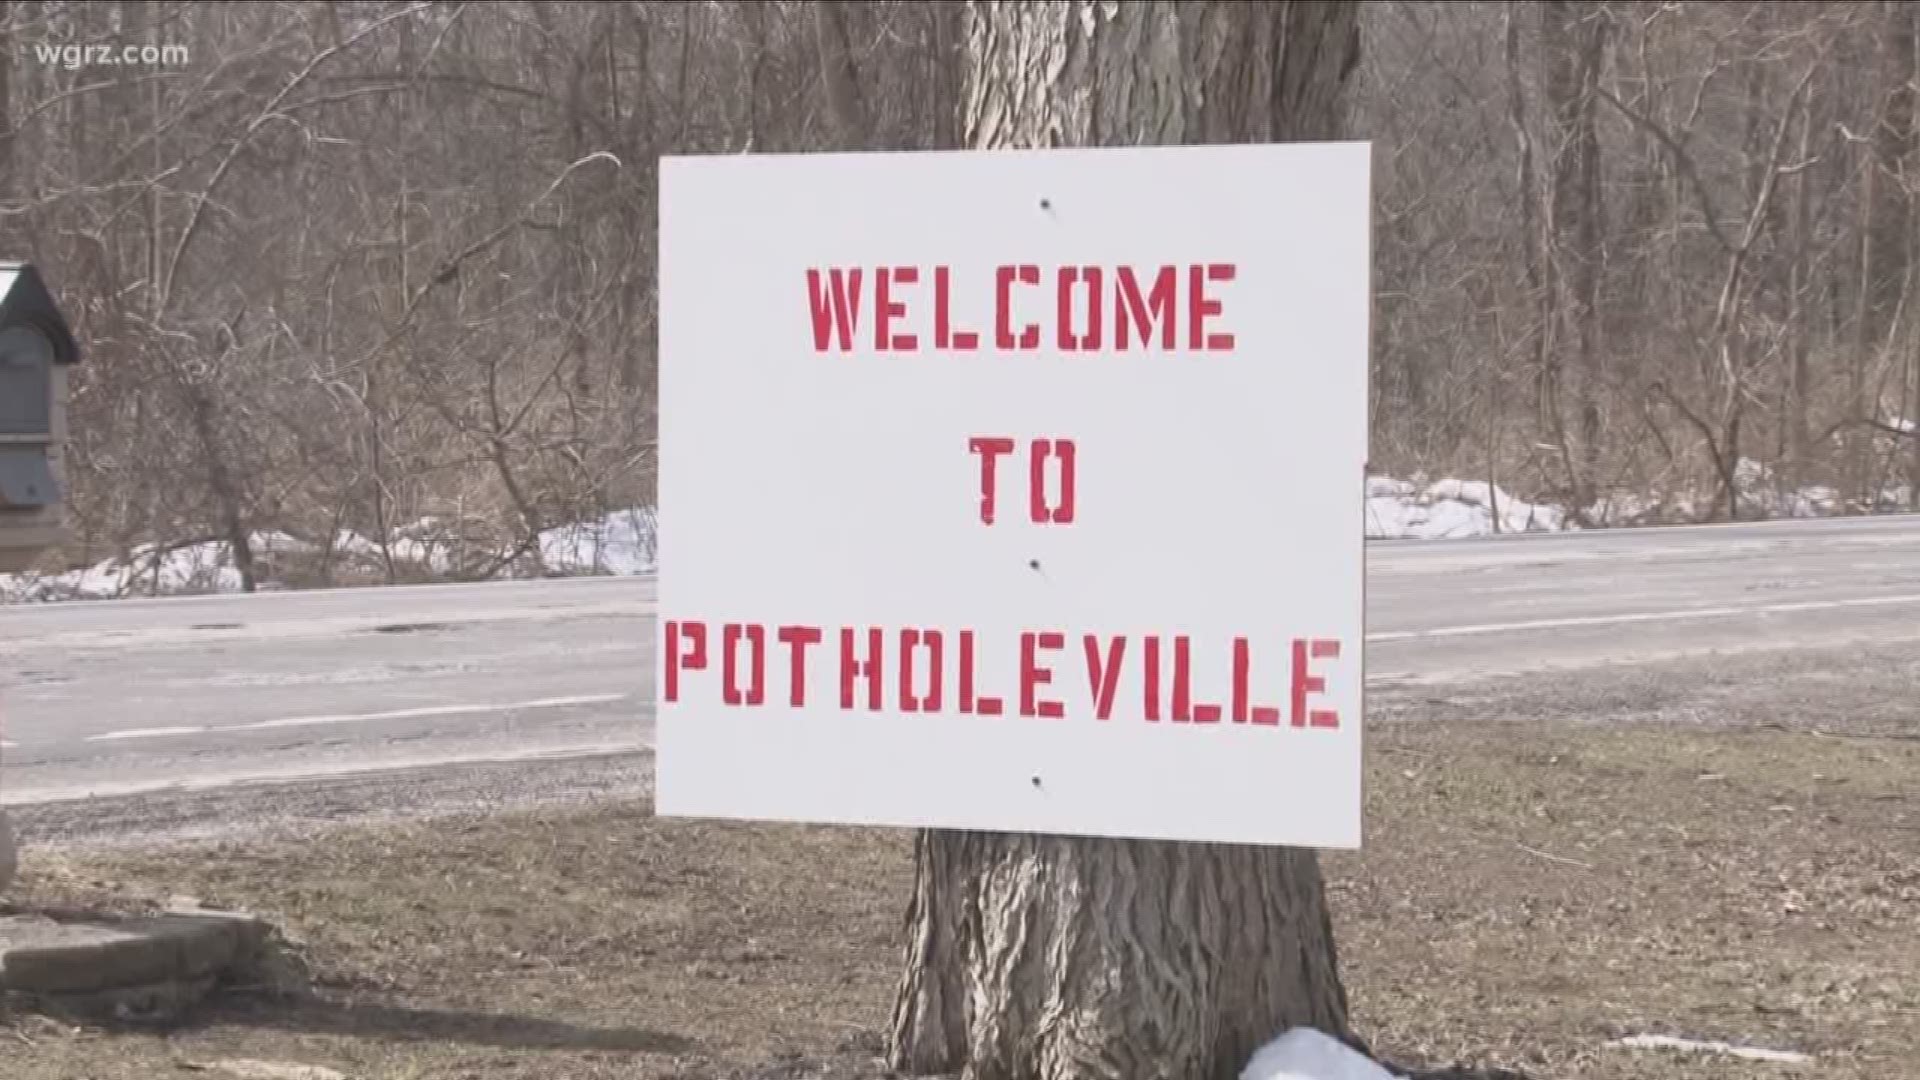 "Potholeville" Gets A New Sign